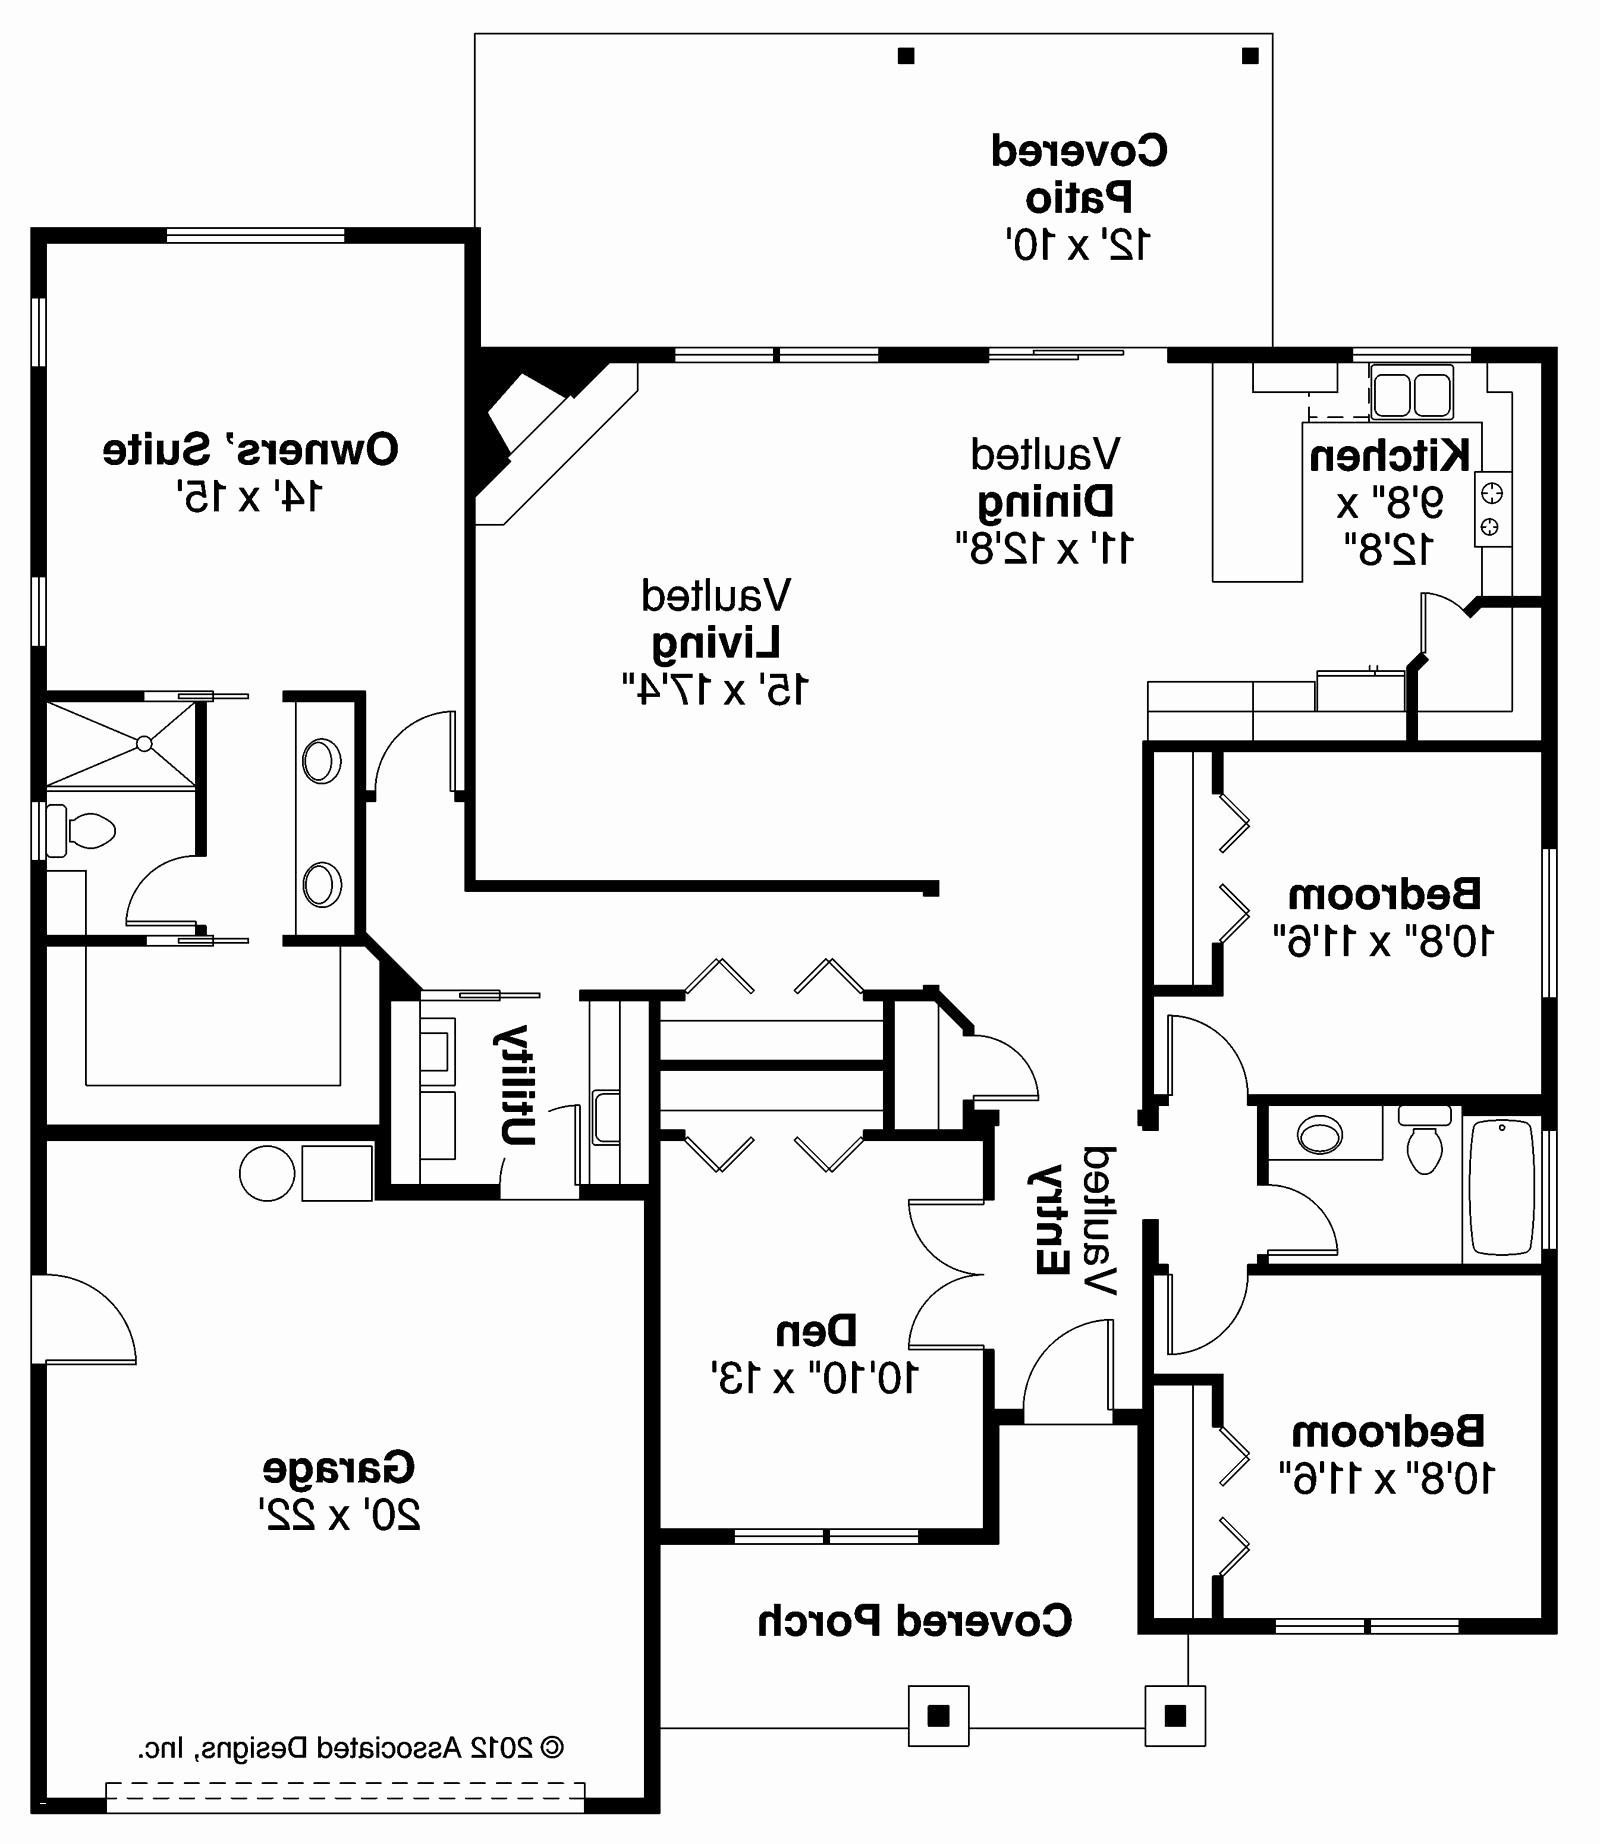 Elec Wiring Diagram Best House Wiring Diagram Electrical Floor Plan 2004 2010 Bmw X3 E83